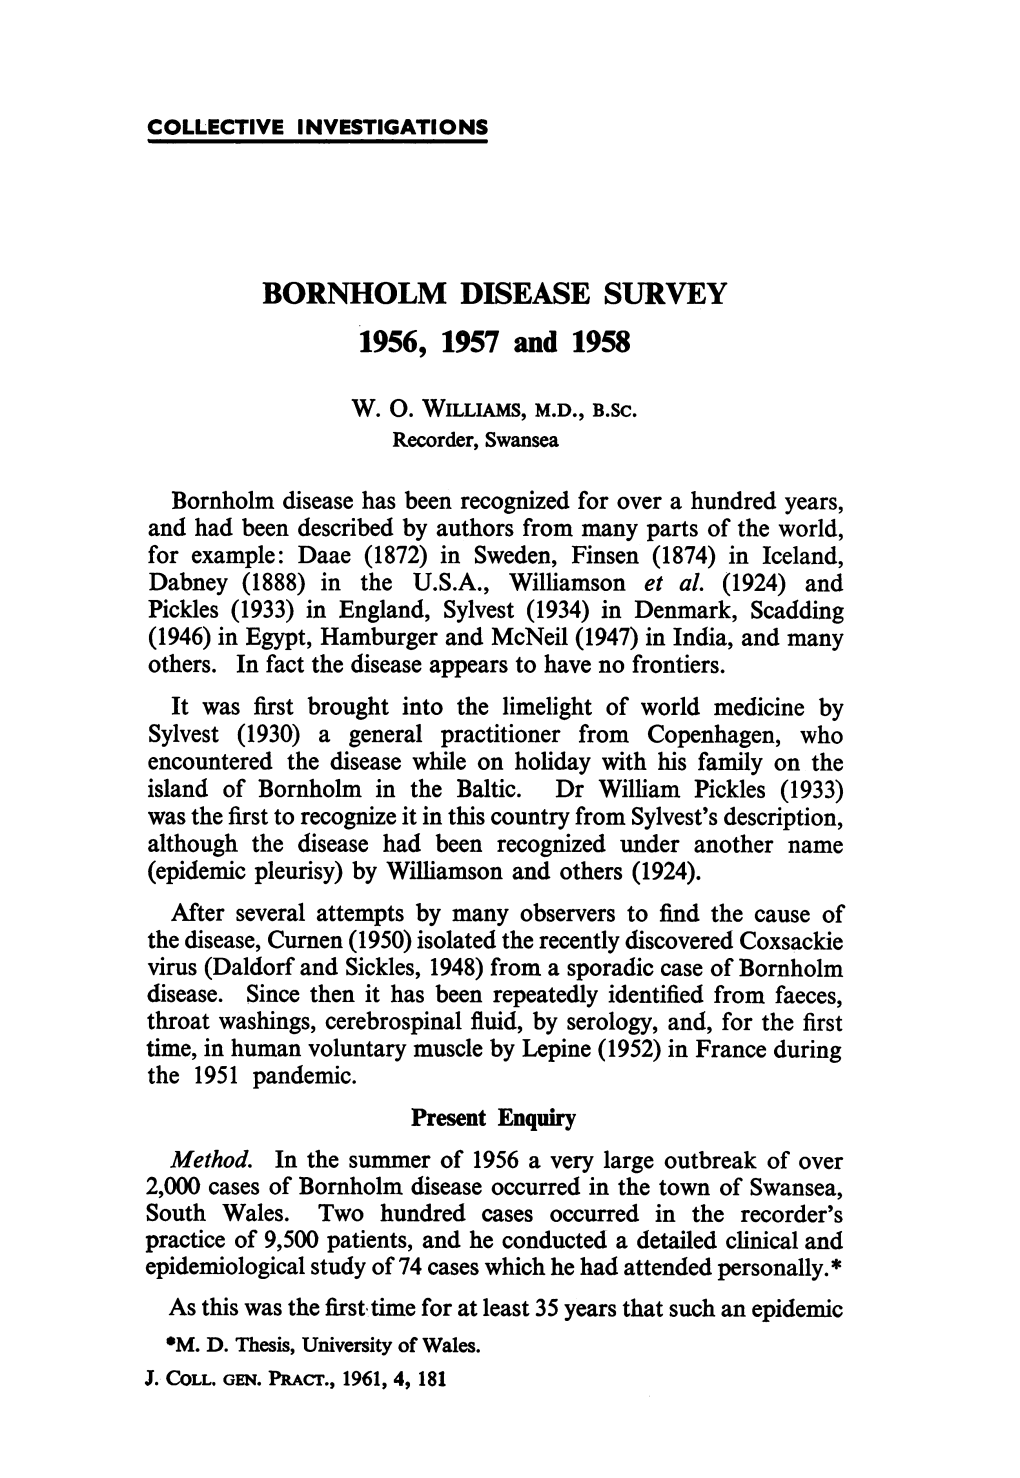 BORNHOLM DISEASE SURVEY 1956, 1957 and 1958